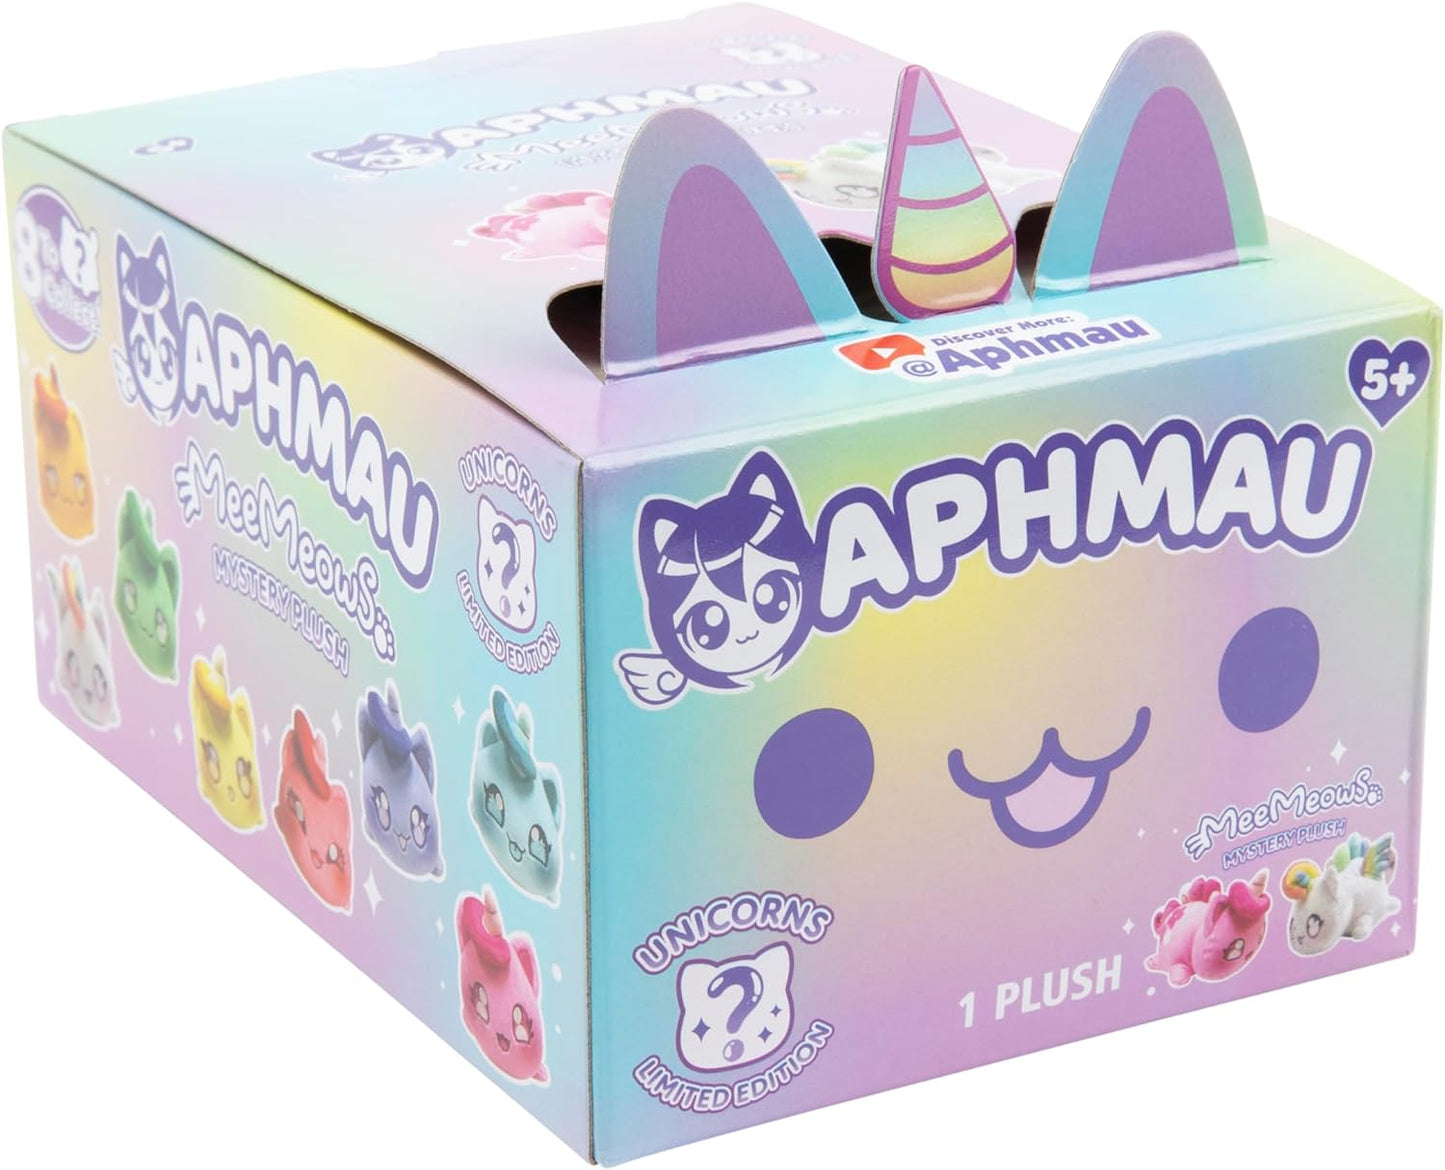 YELLOW UNICORN CAT - MeeMeows Limited Edition Aphmau Plush (NEW) RARE Kitty Toy